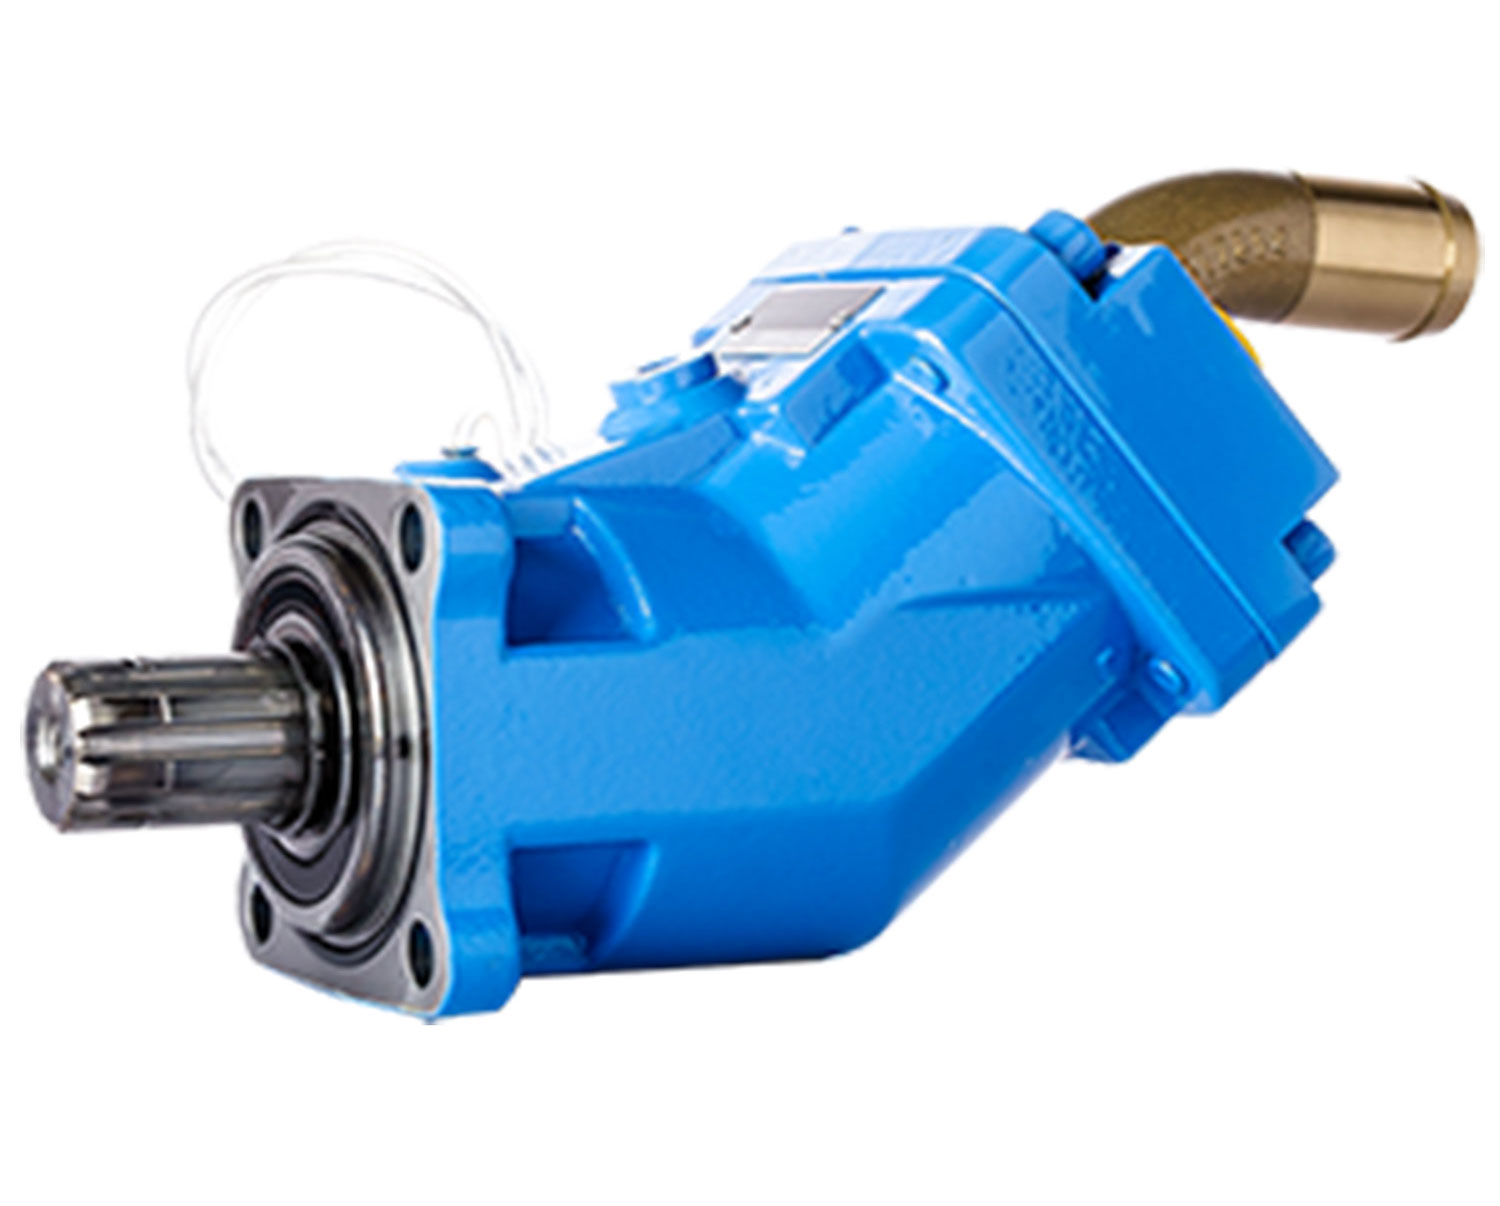 LKW-Hydraulik Konstantpumpe XPi Hydro-Leduc, blau